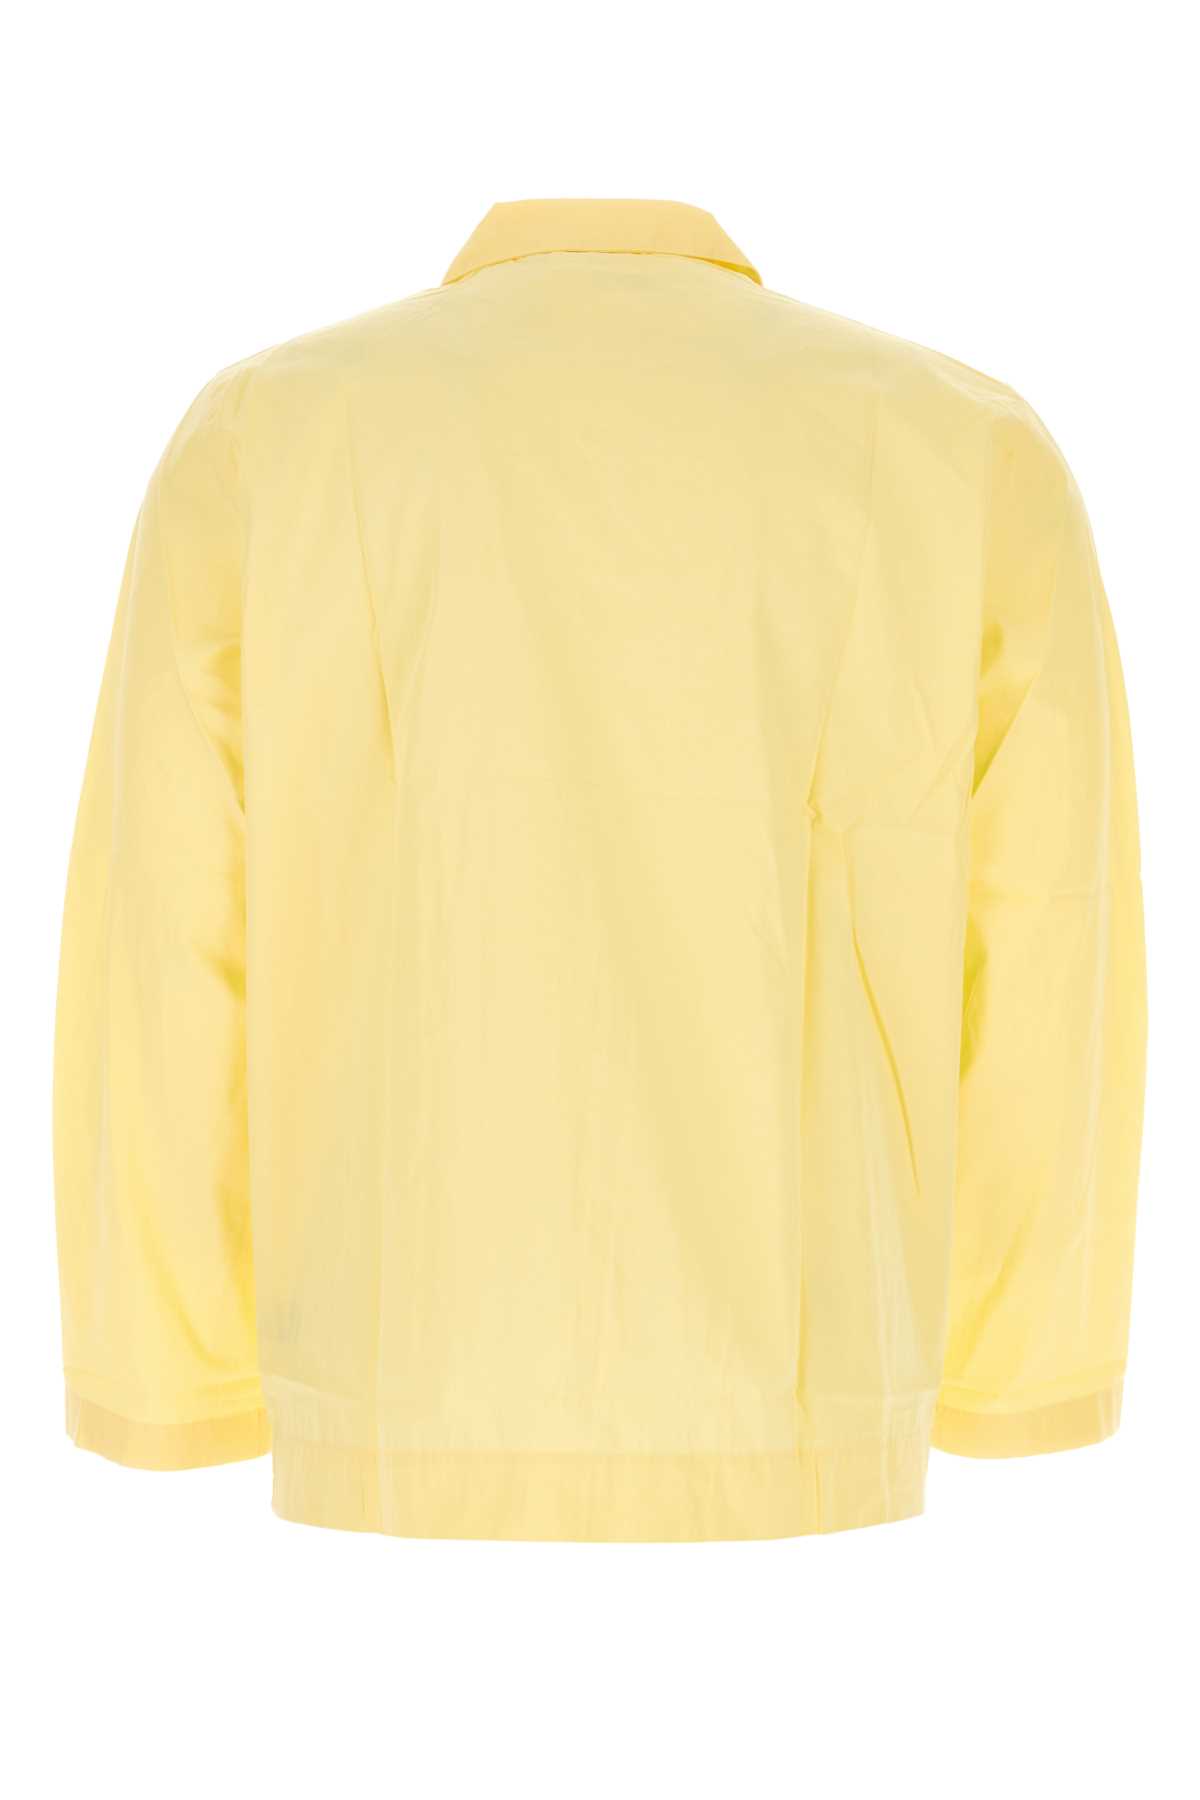 Tekla Yellow Cotton Pyjama Shirt In Lemonade